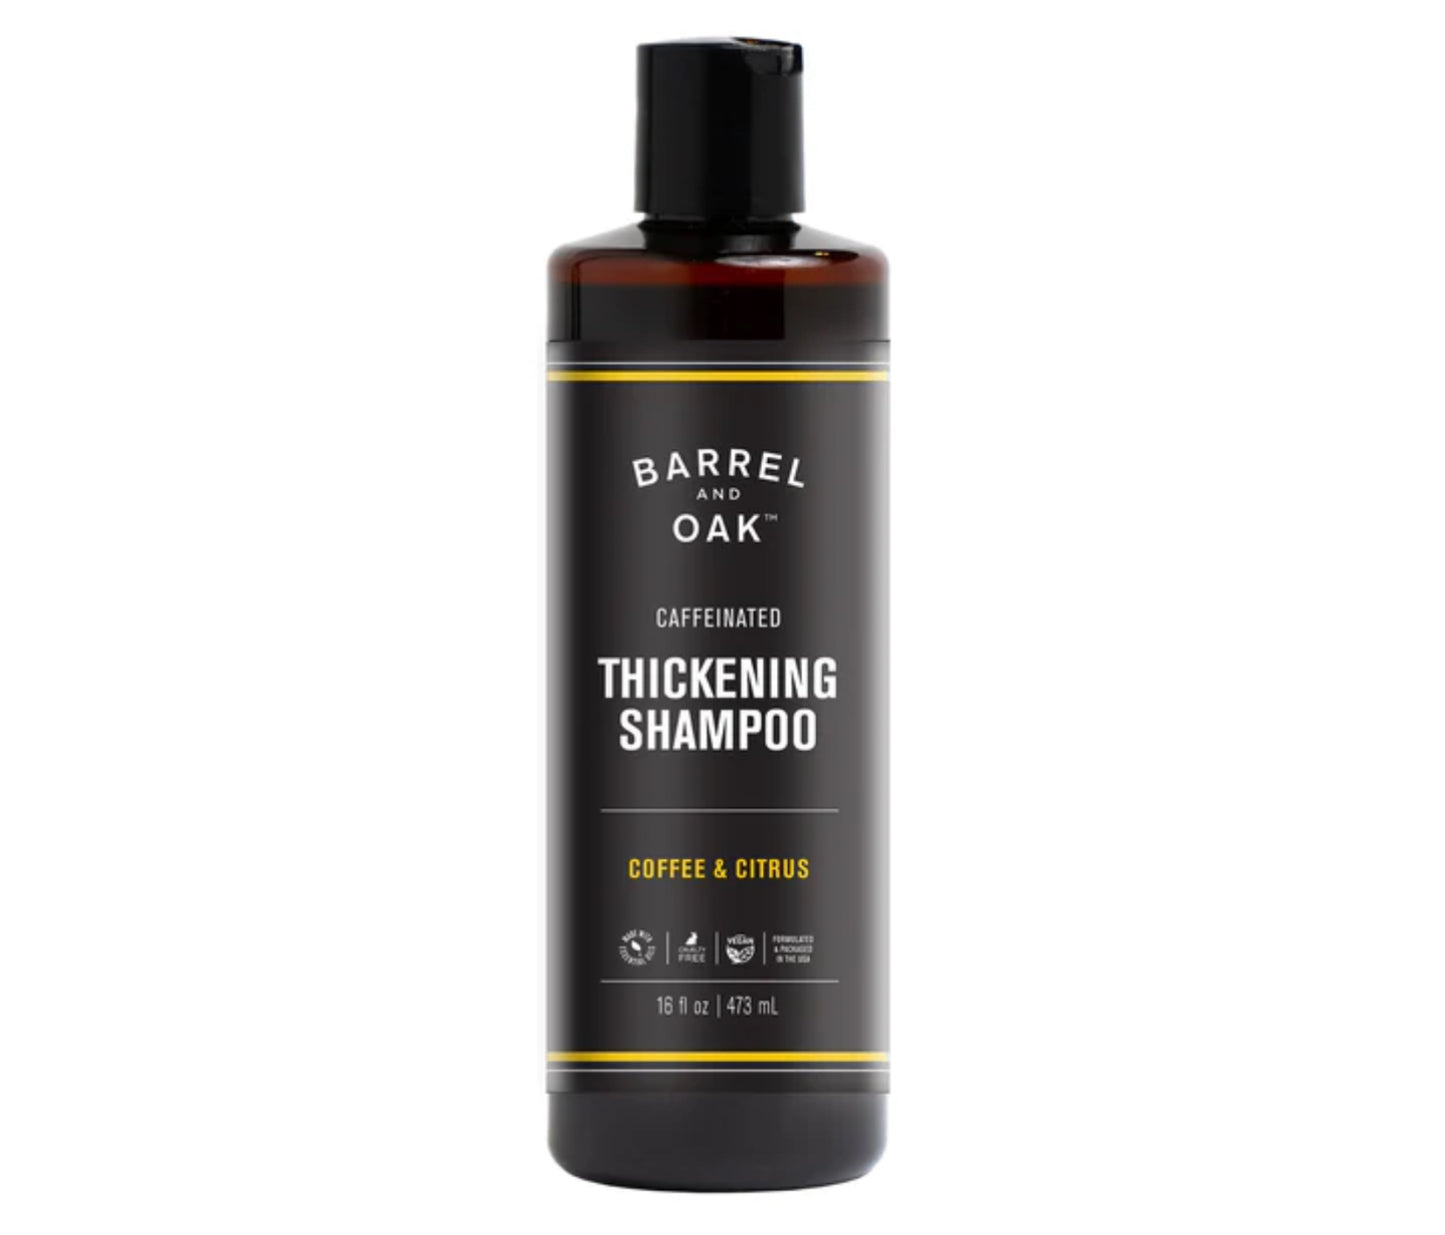 Caffeinated Thickening Shampoo